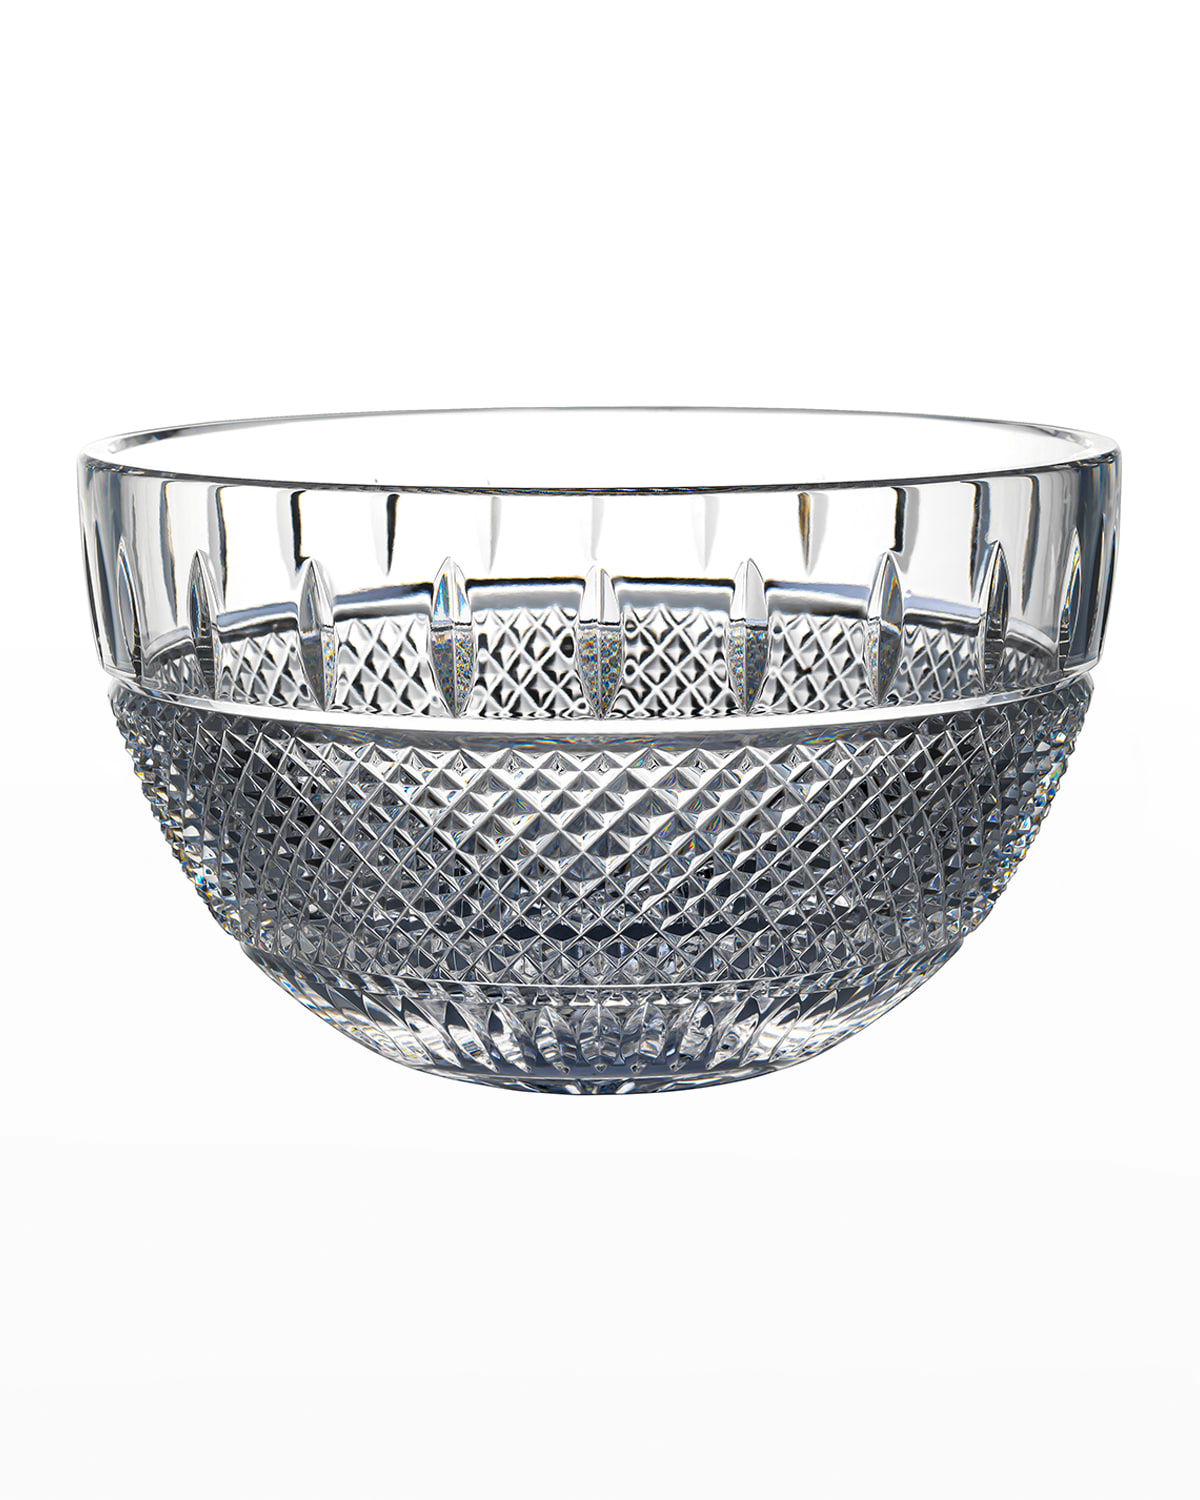 Set 2 Clear Cut Glass Crystal Pedestal Bowls Planters Irish Lace Pattern 7"x8" 